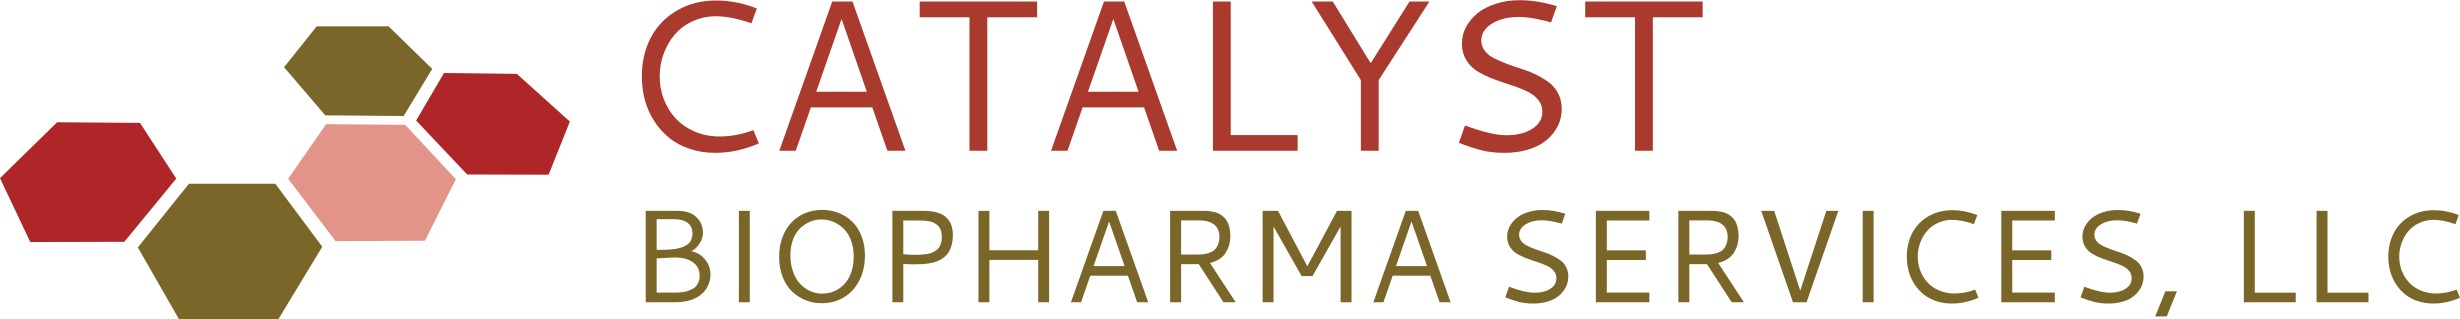 Catalyst Biopharma Services Logo